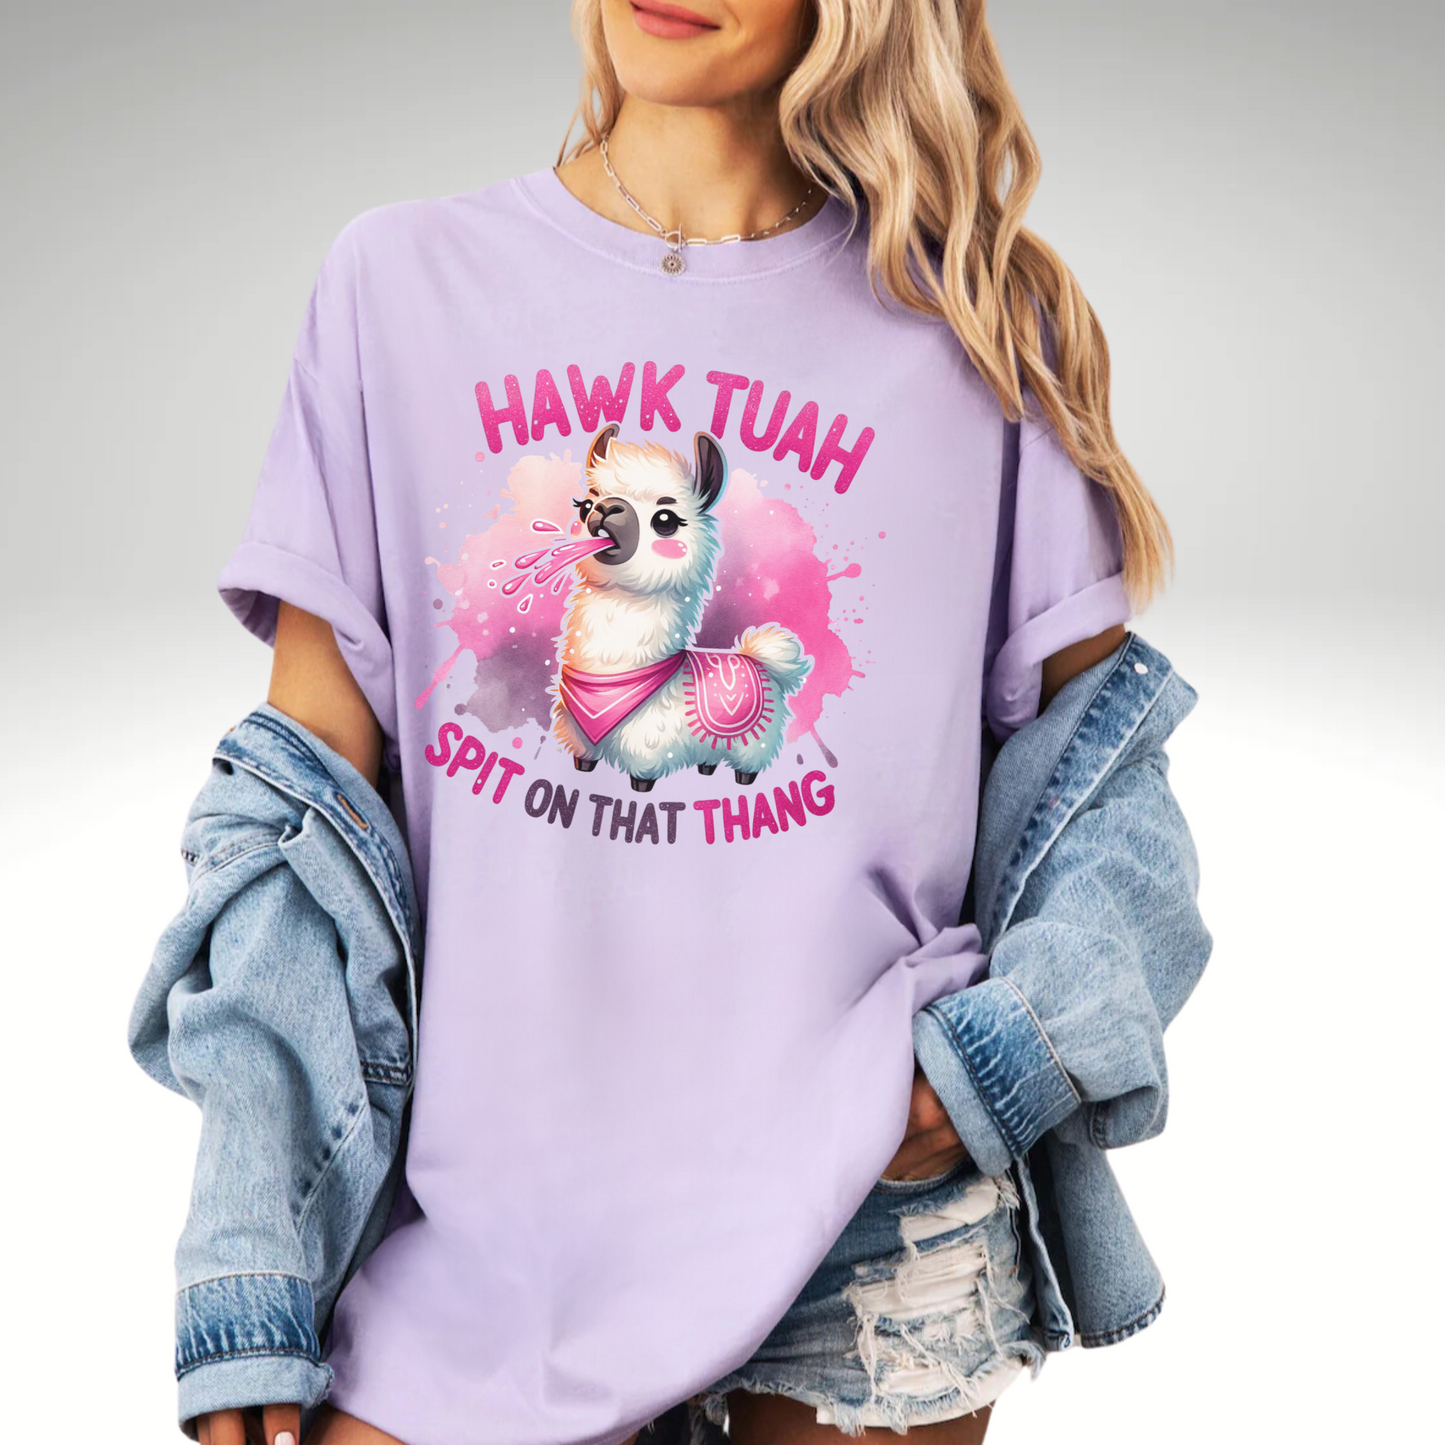 Hawk Tuah, Spit on that Thang Shirt